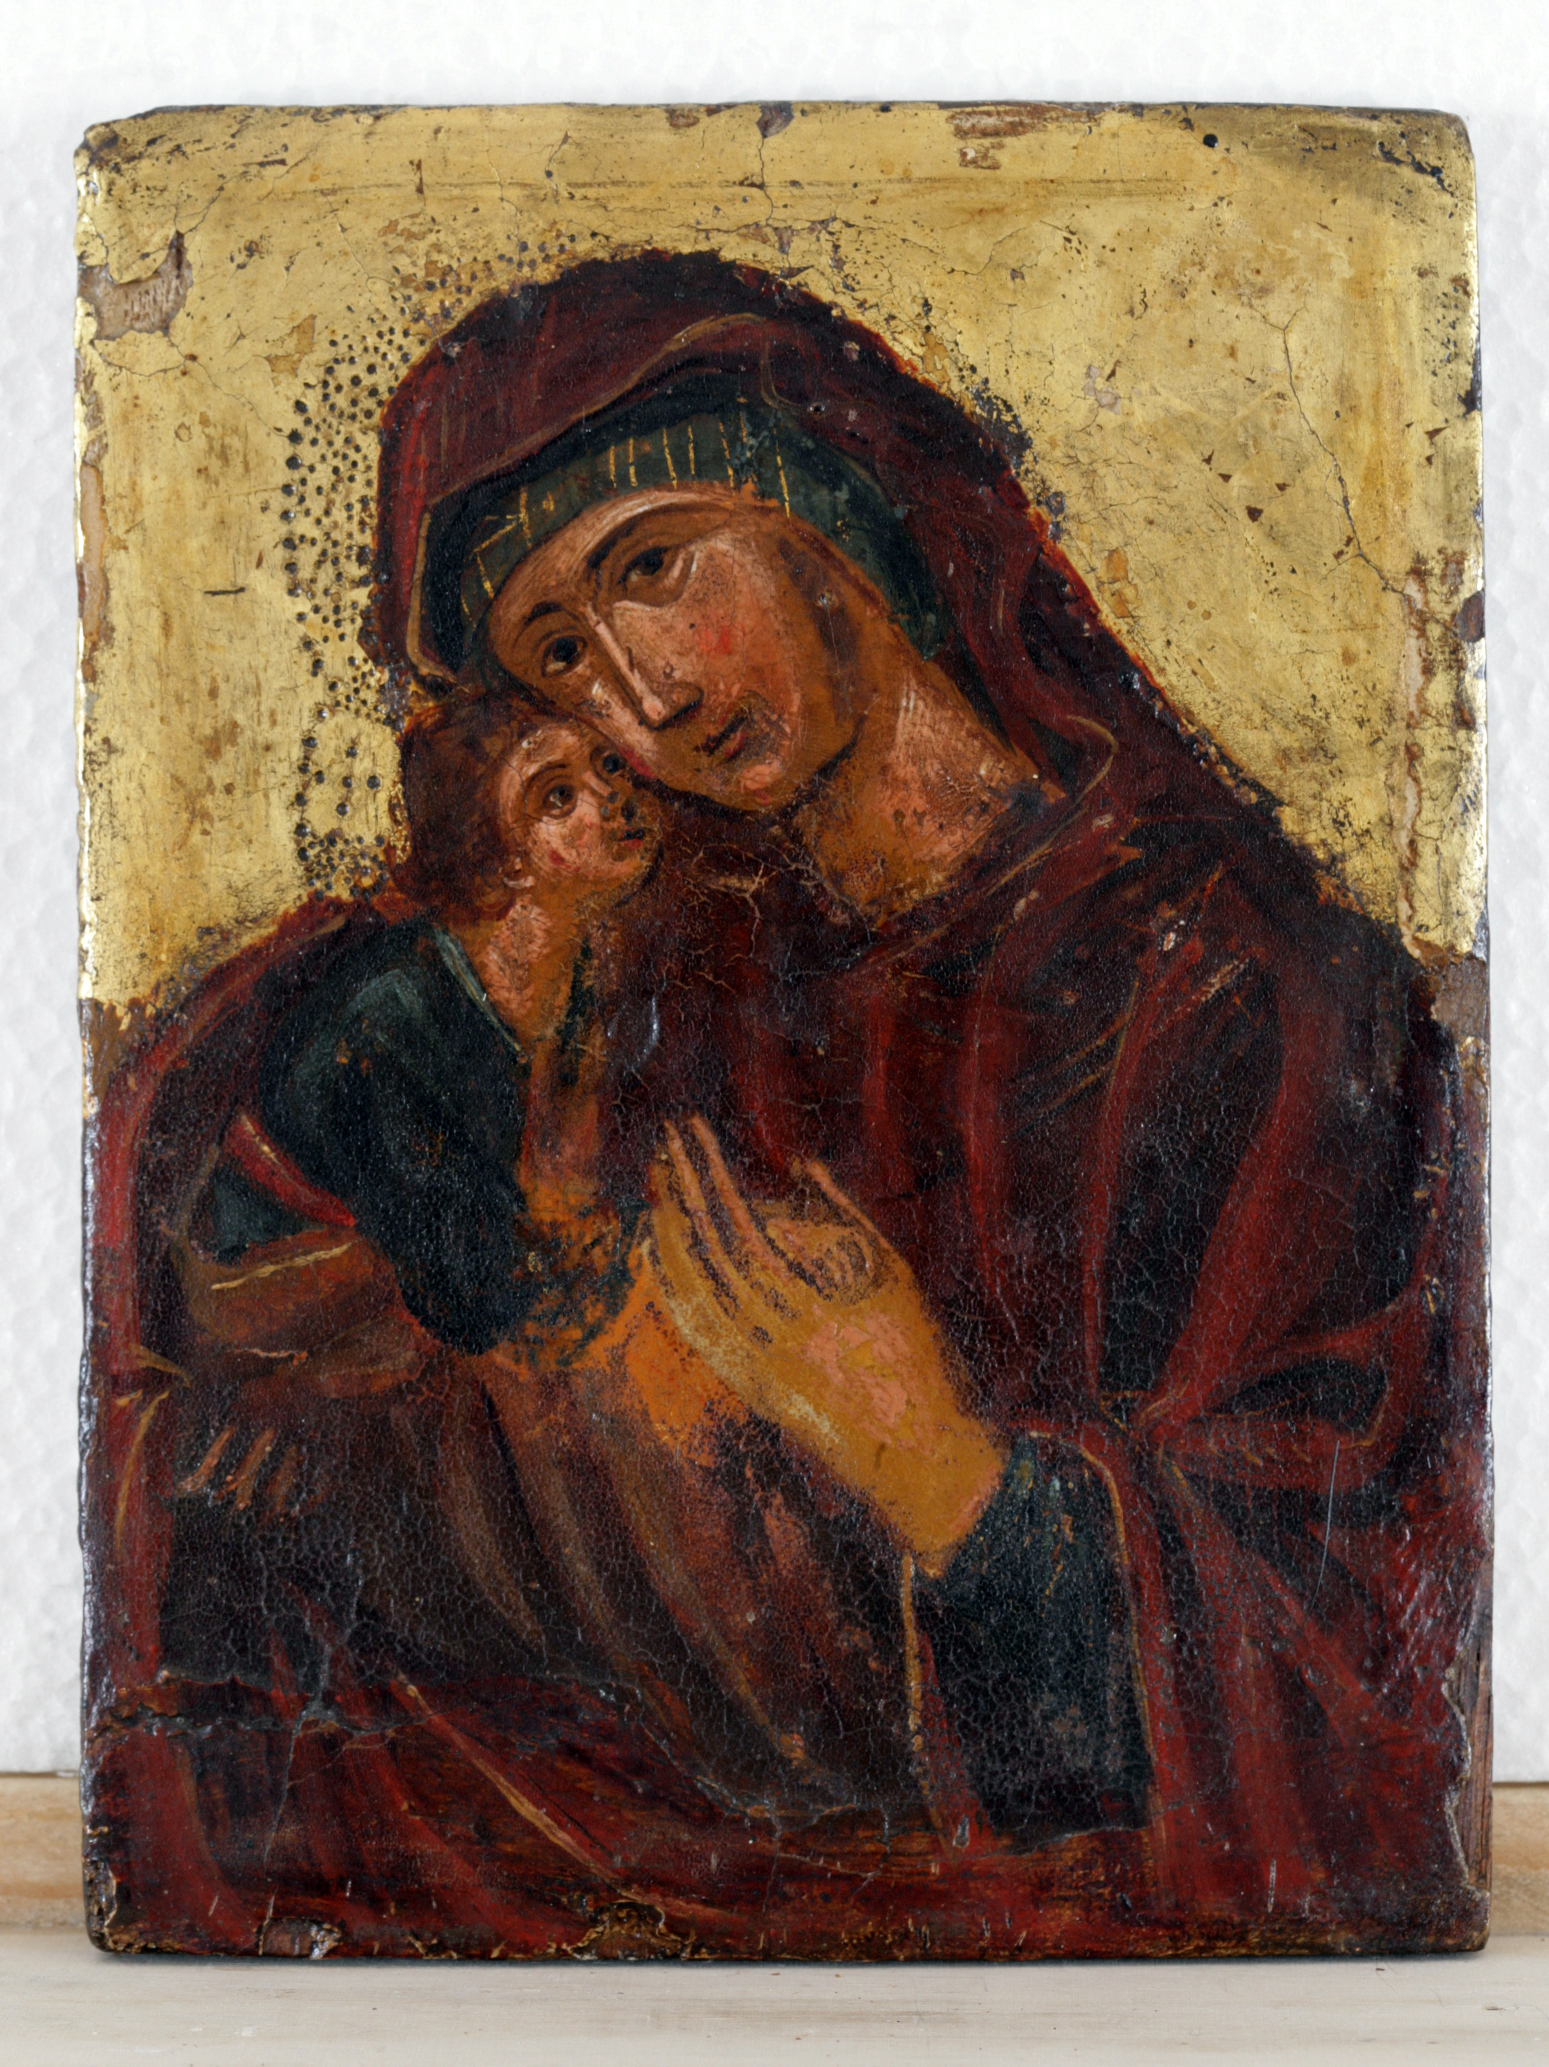 Vergine glikophilousa (icona, opera isolata) - scuola cretese-veneziana (sec. XVII)